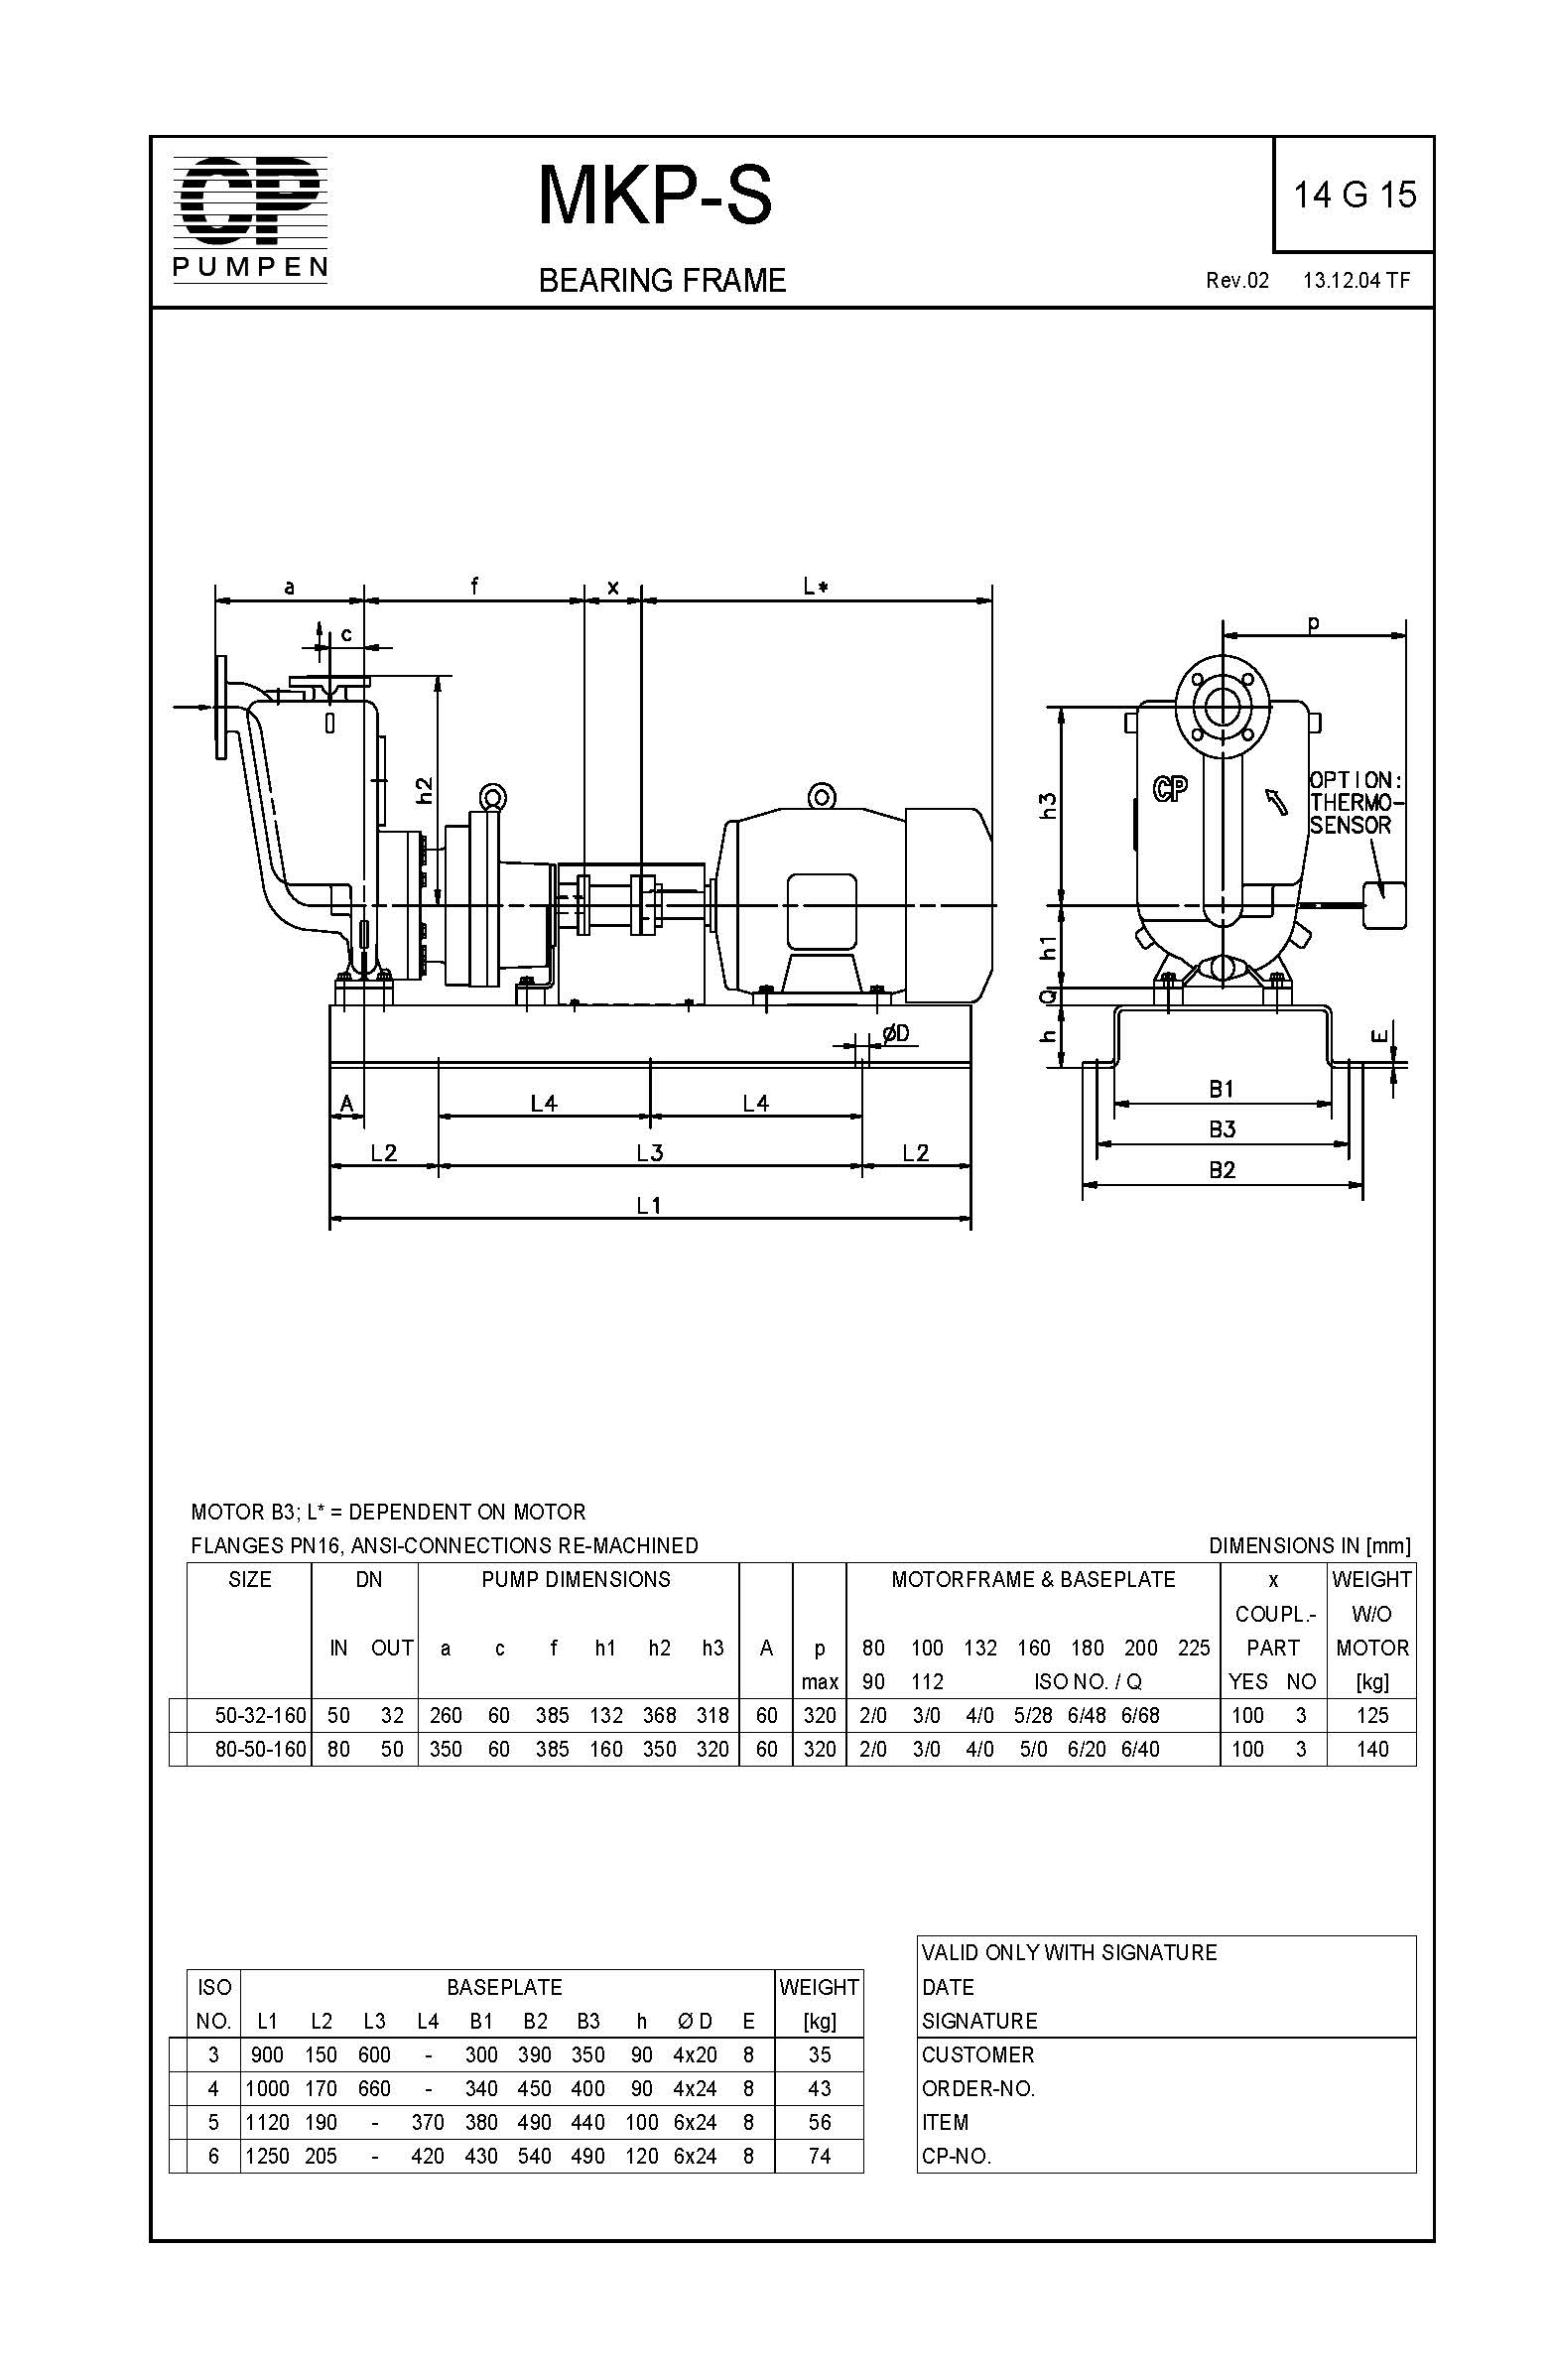 DimensionalDrawing MKP S BearingFrame Baseplate Motor 14G15 Rev02 1